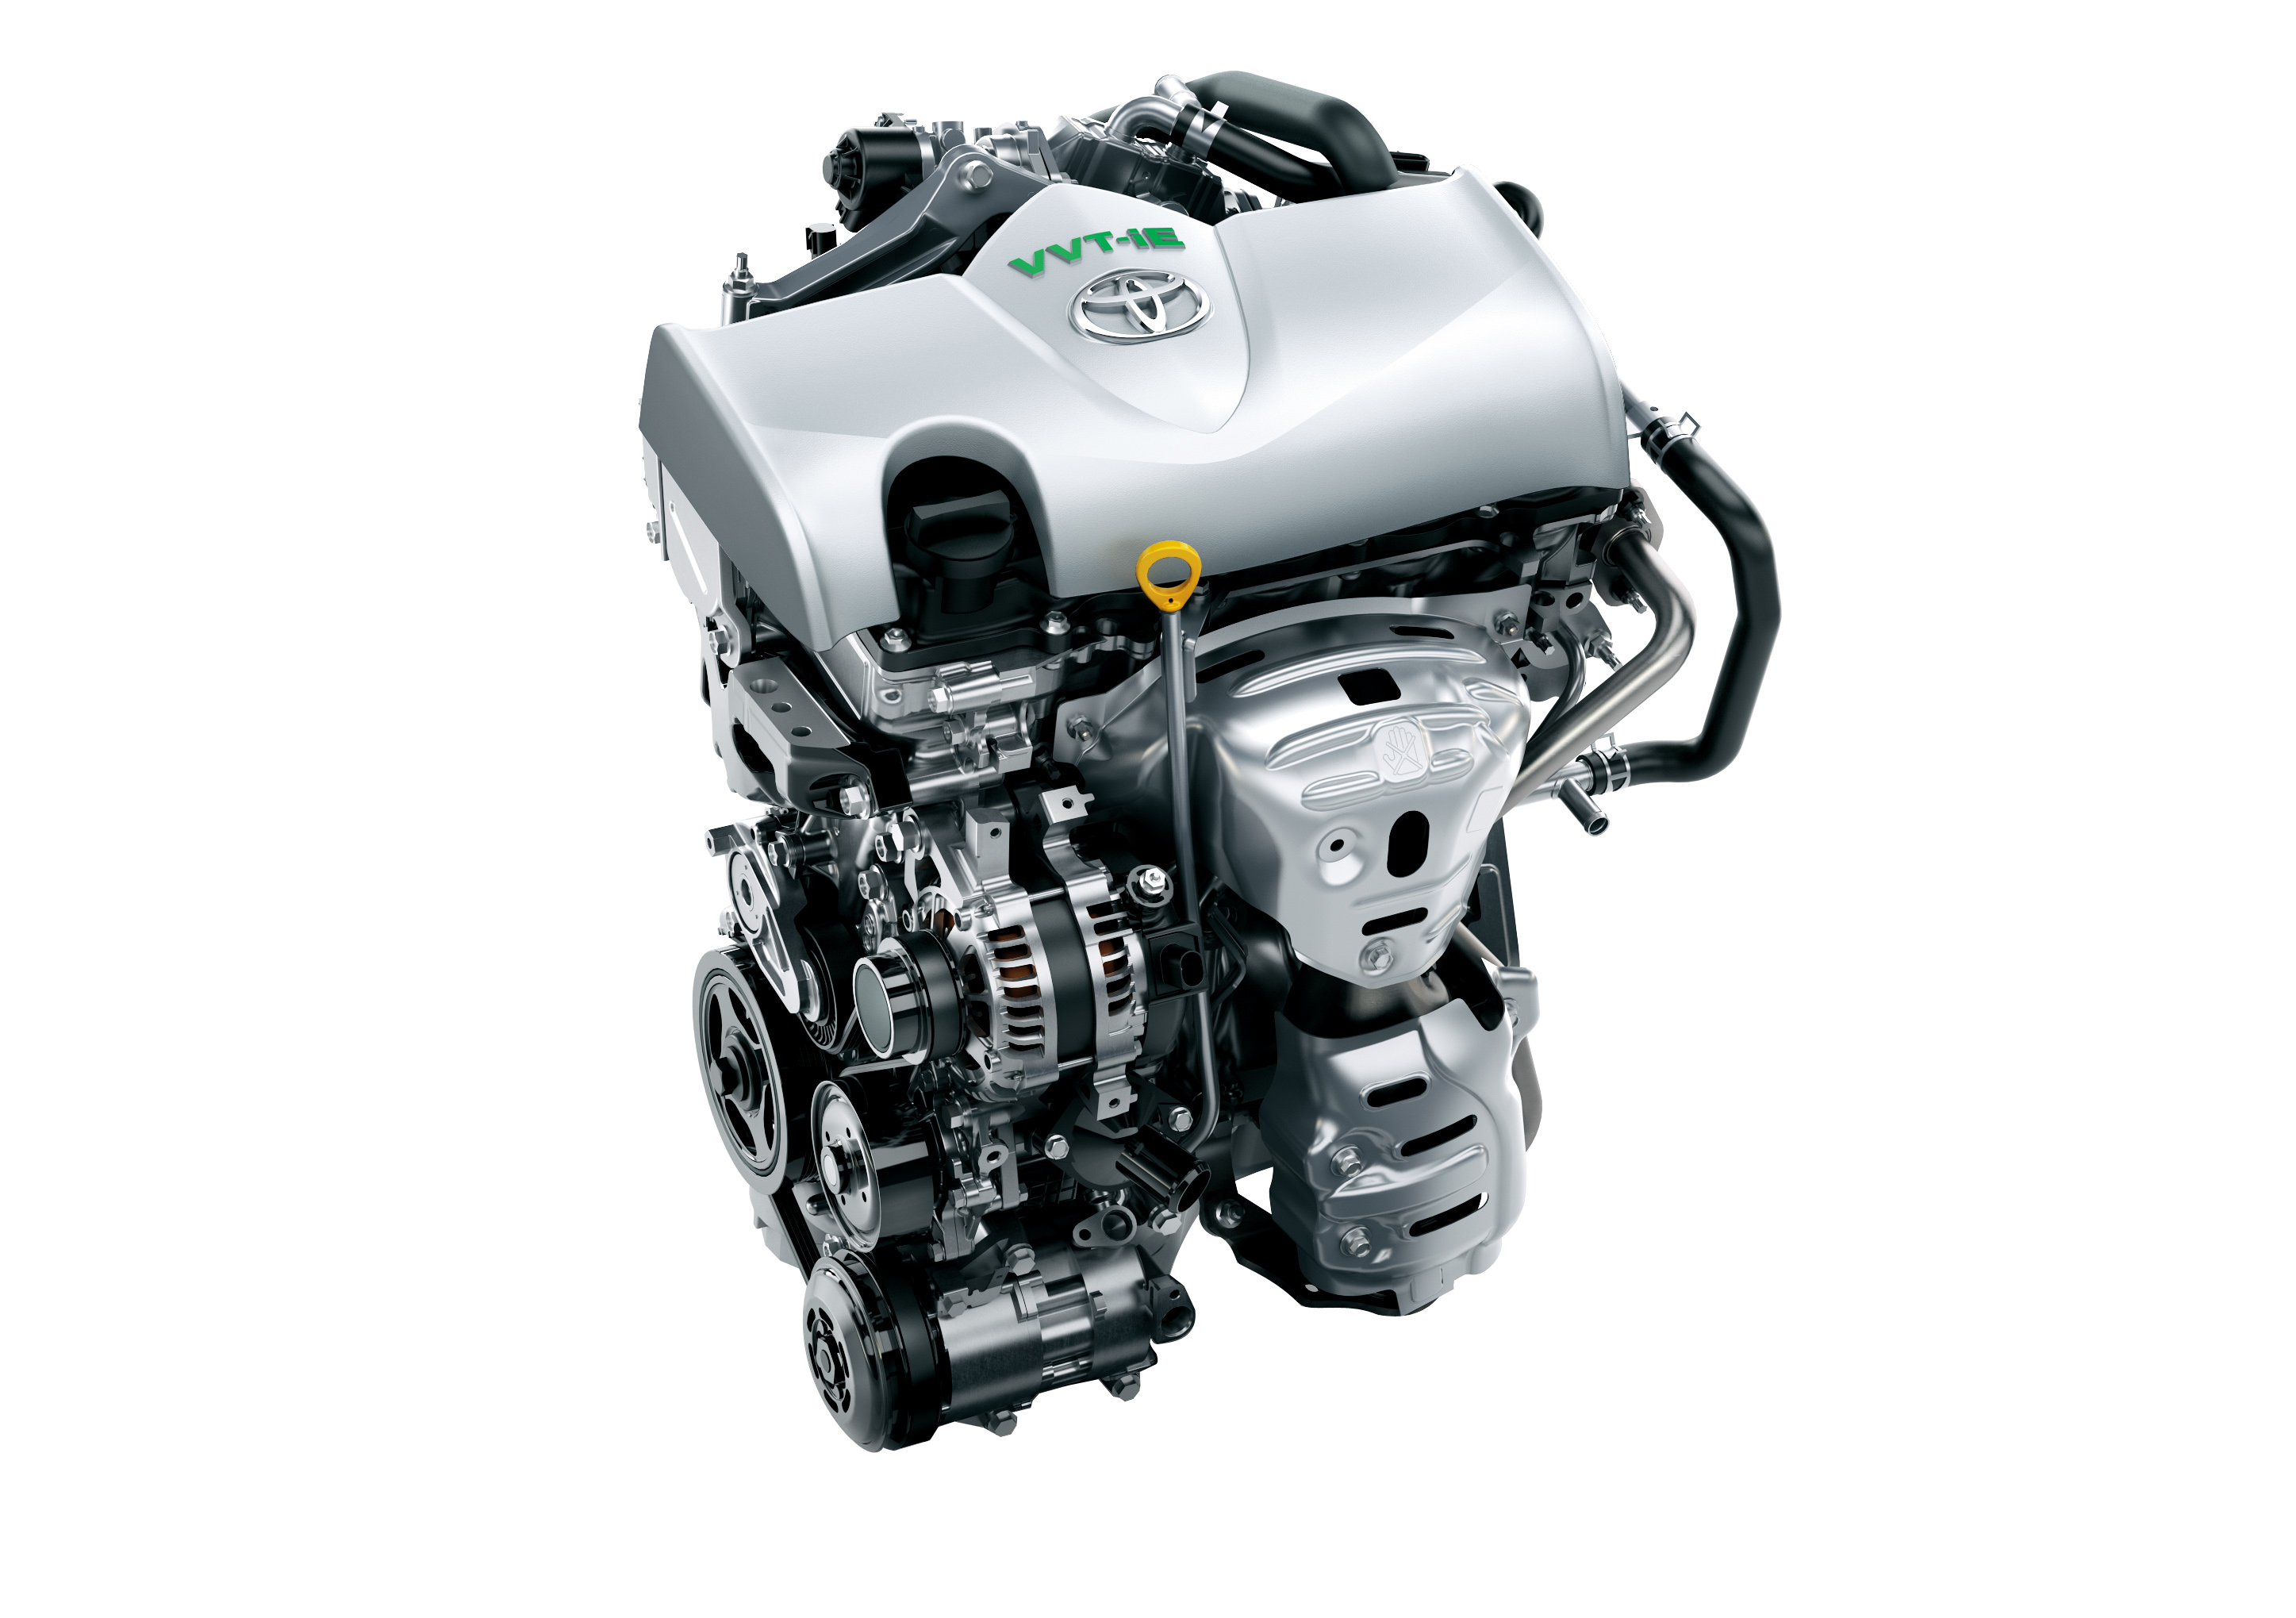 Toyota Develops Engines with Improved Fuel Efficiency - 1.3-liter gasoline engine